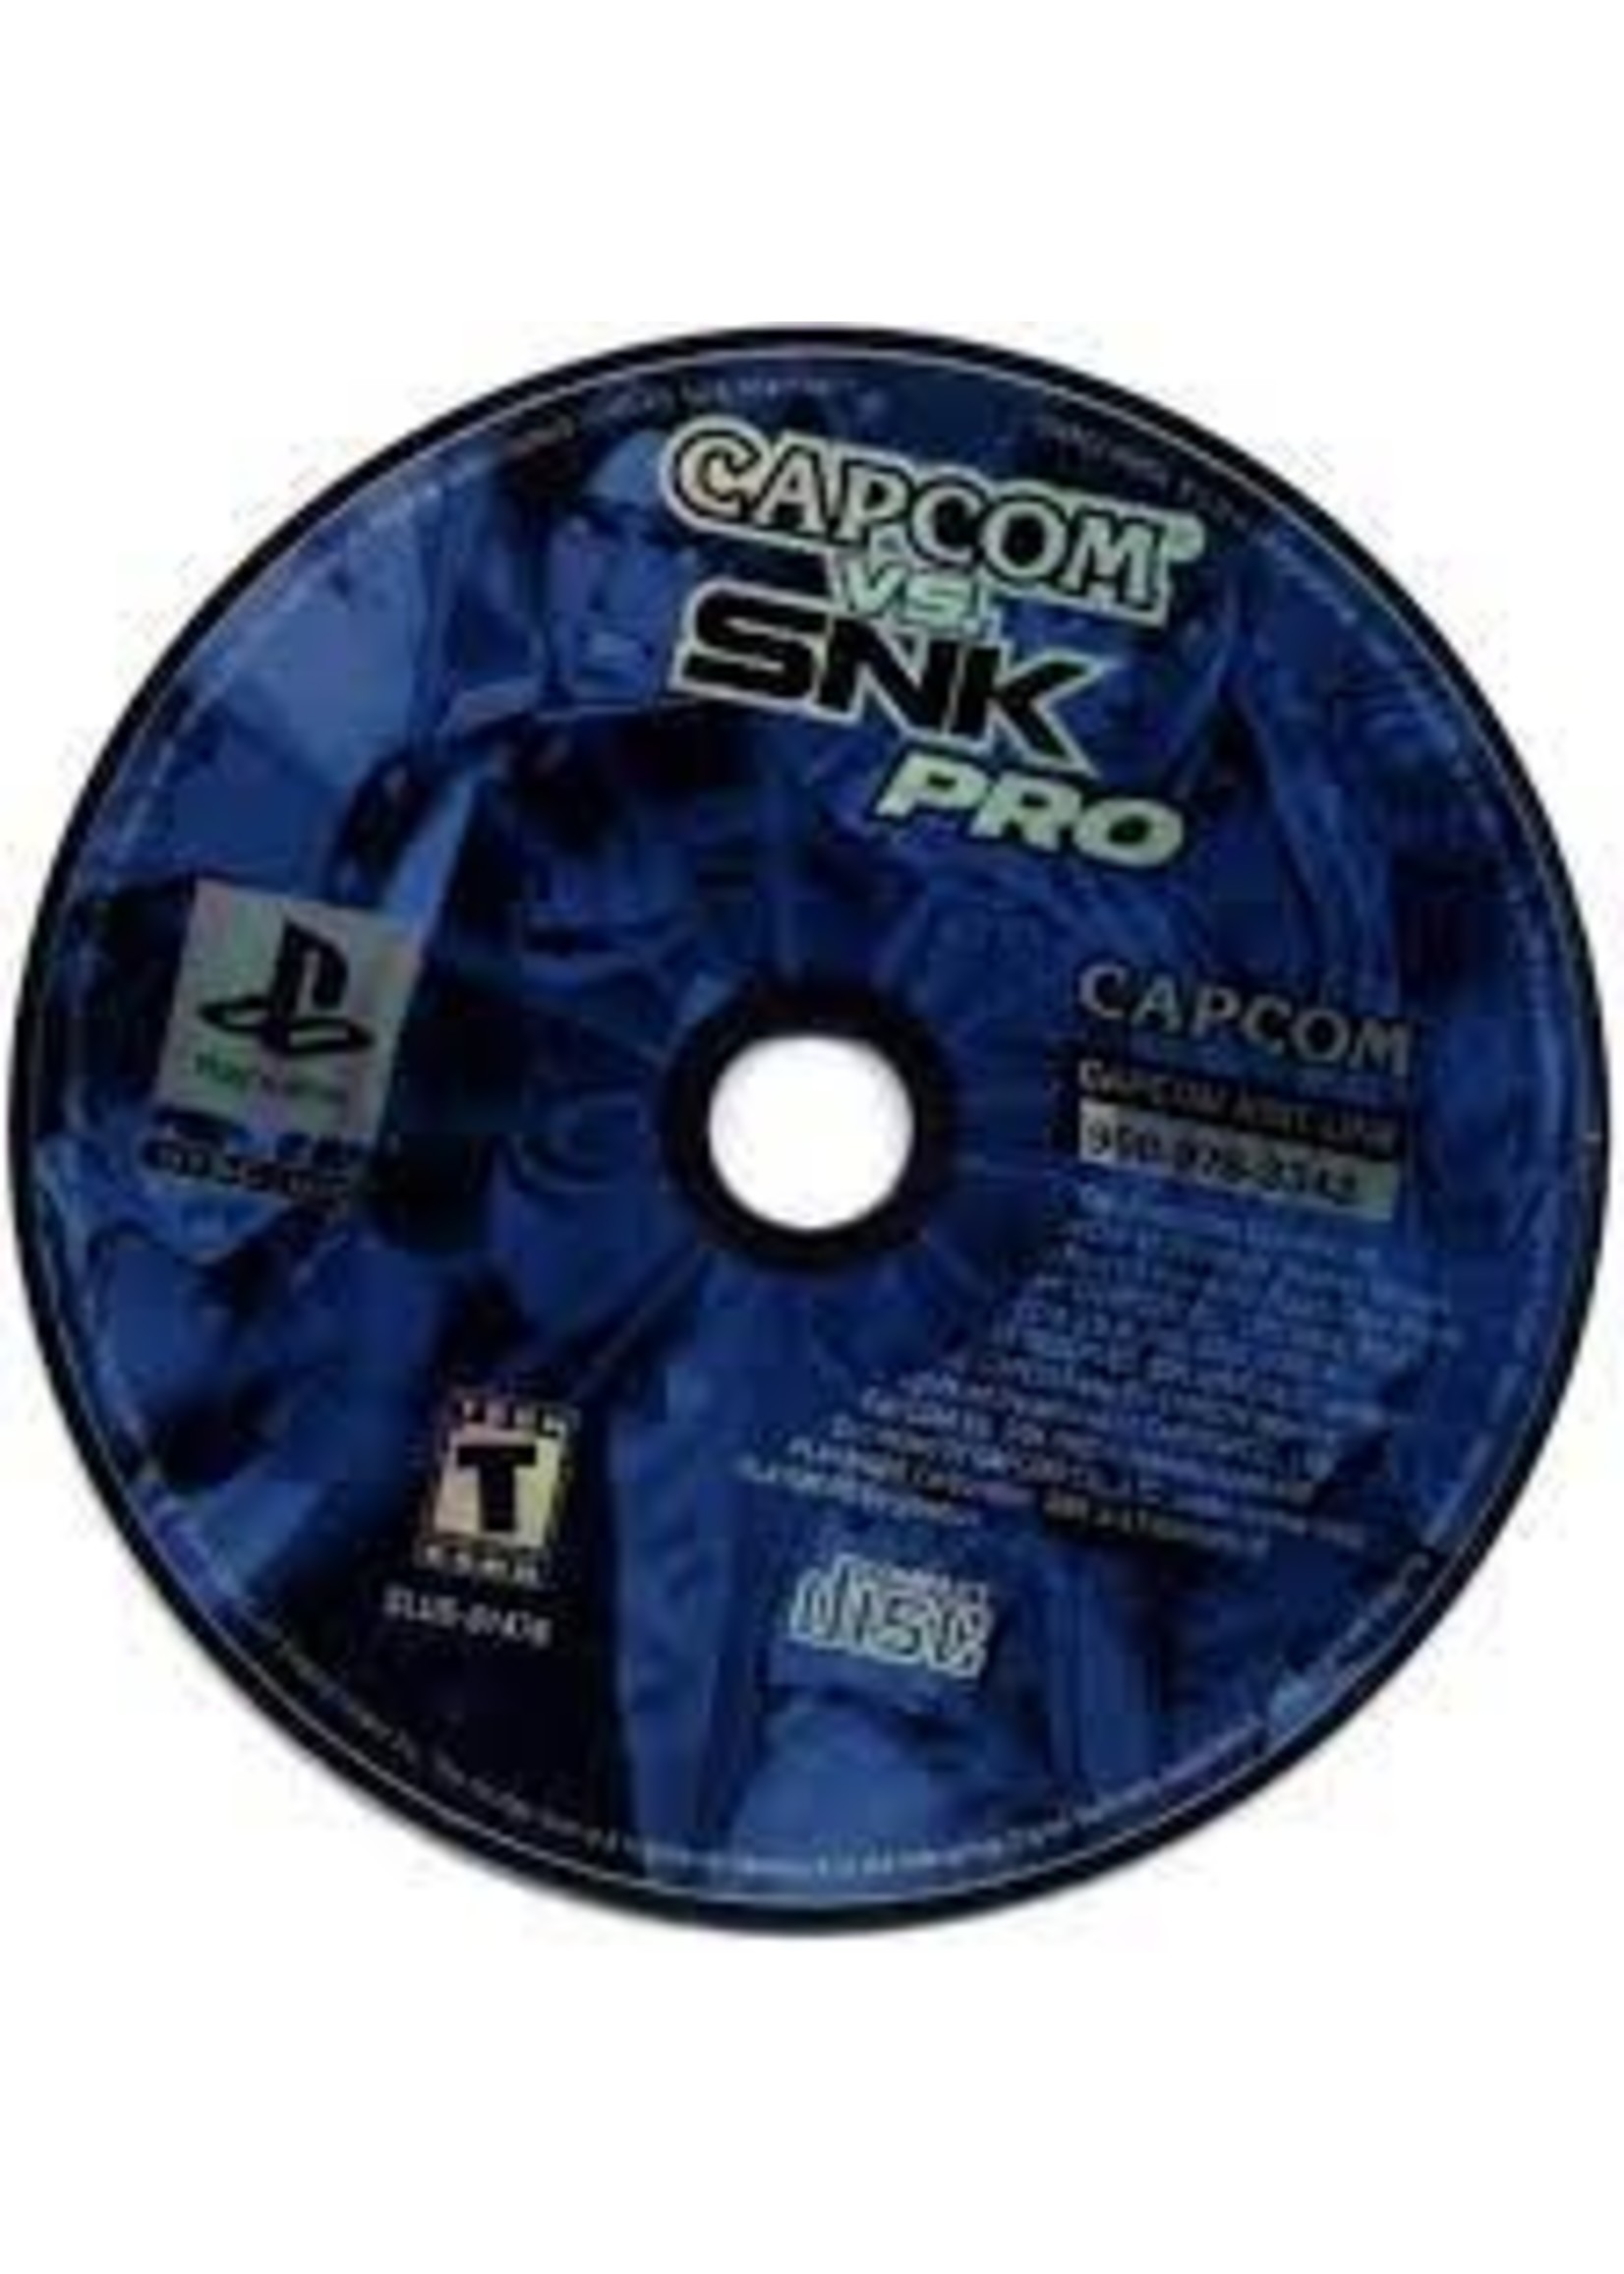 Sony Playstation 1 (PS1) Capcom vs SNK Pro - Print